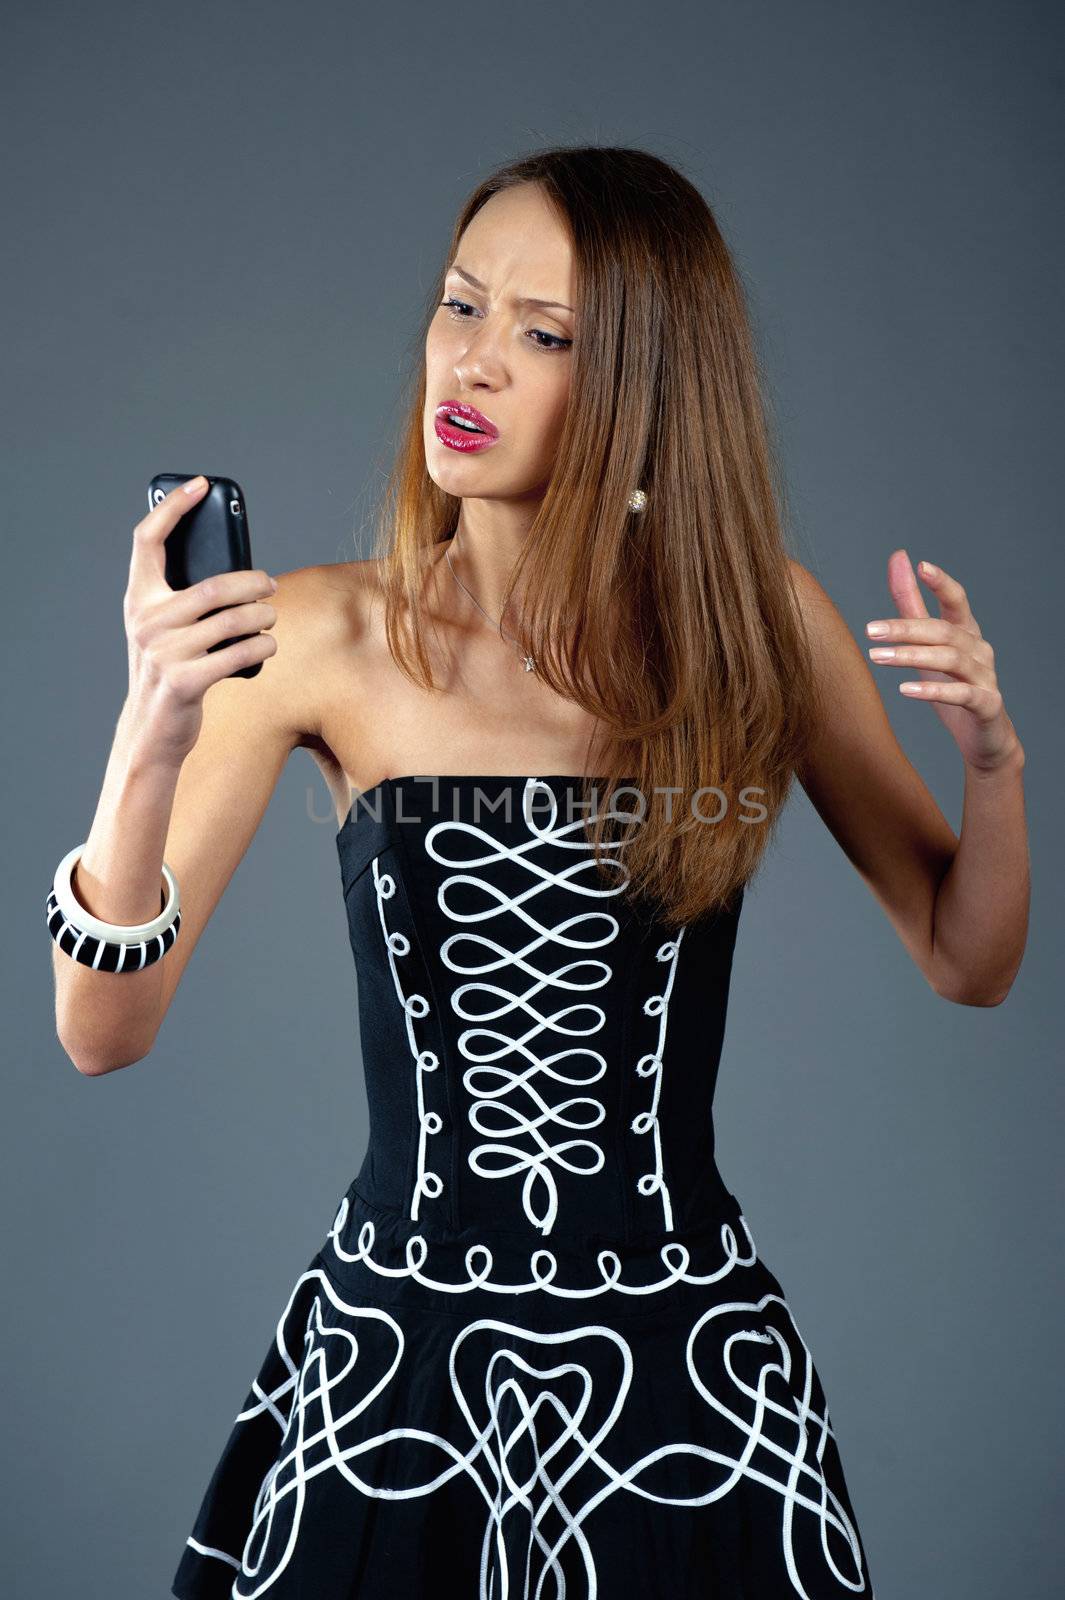 The beautiful surprised model looks in phone